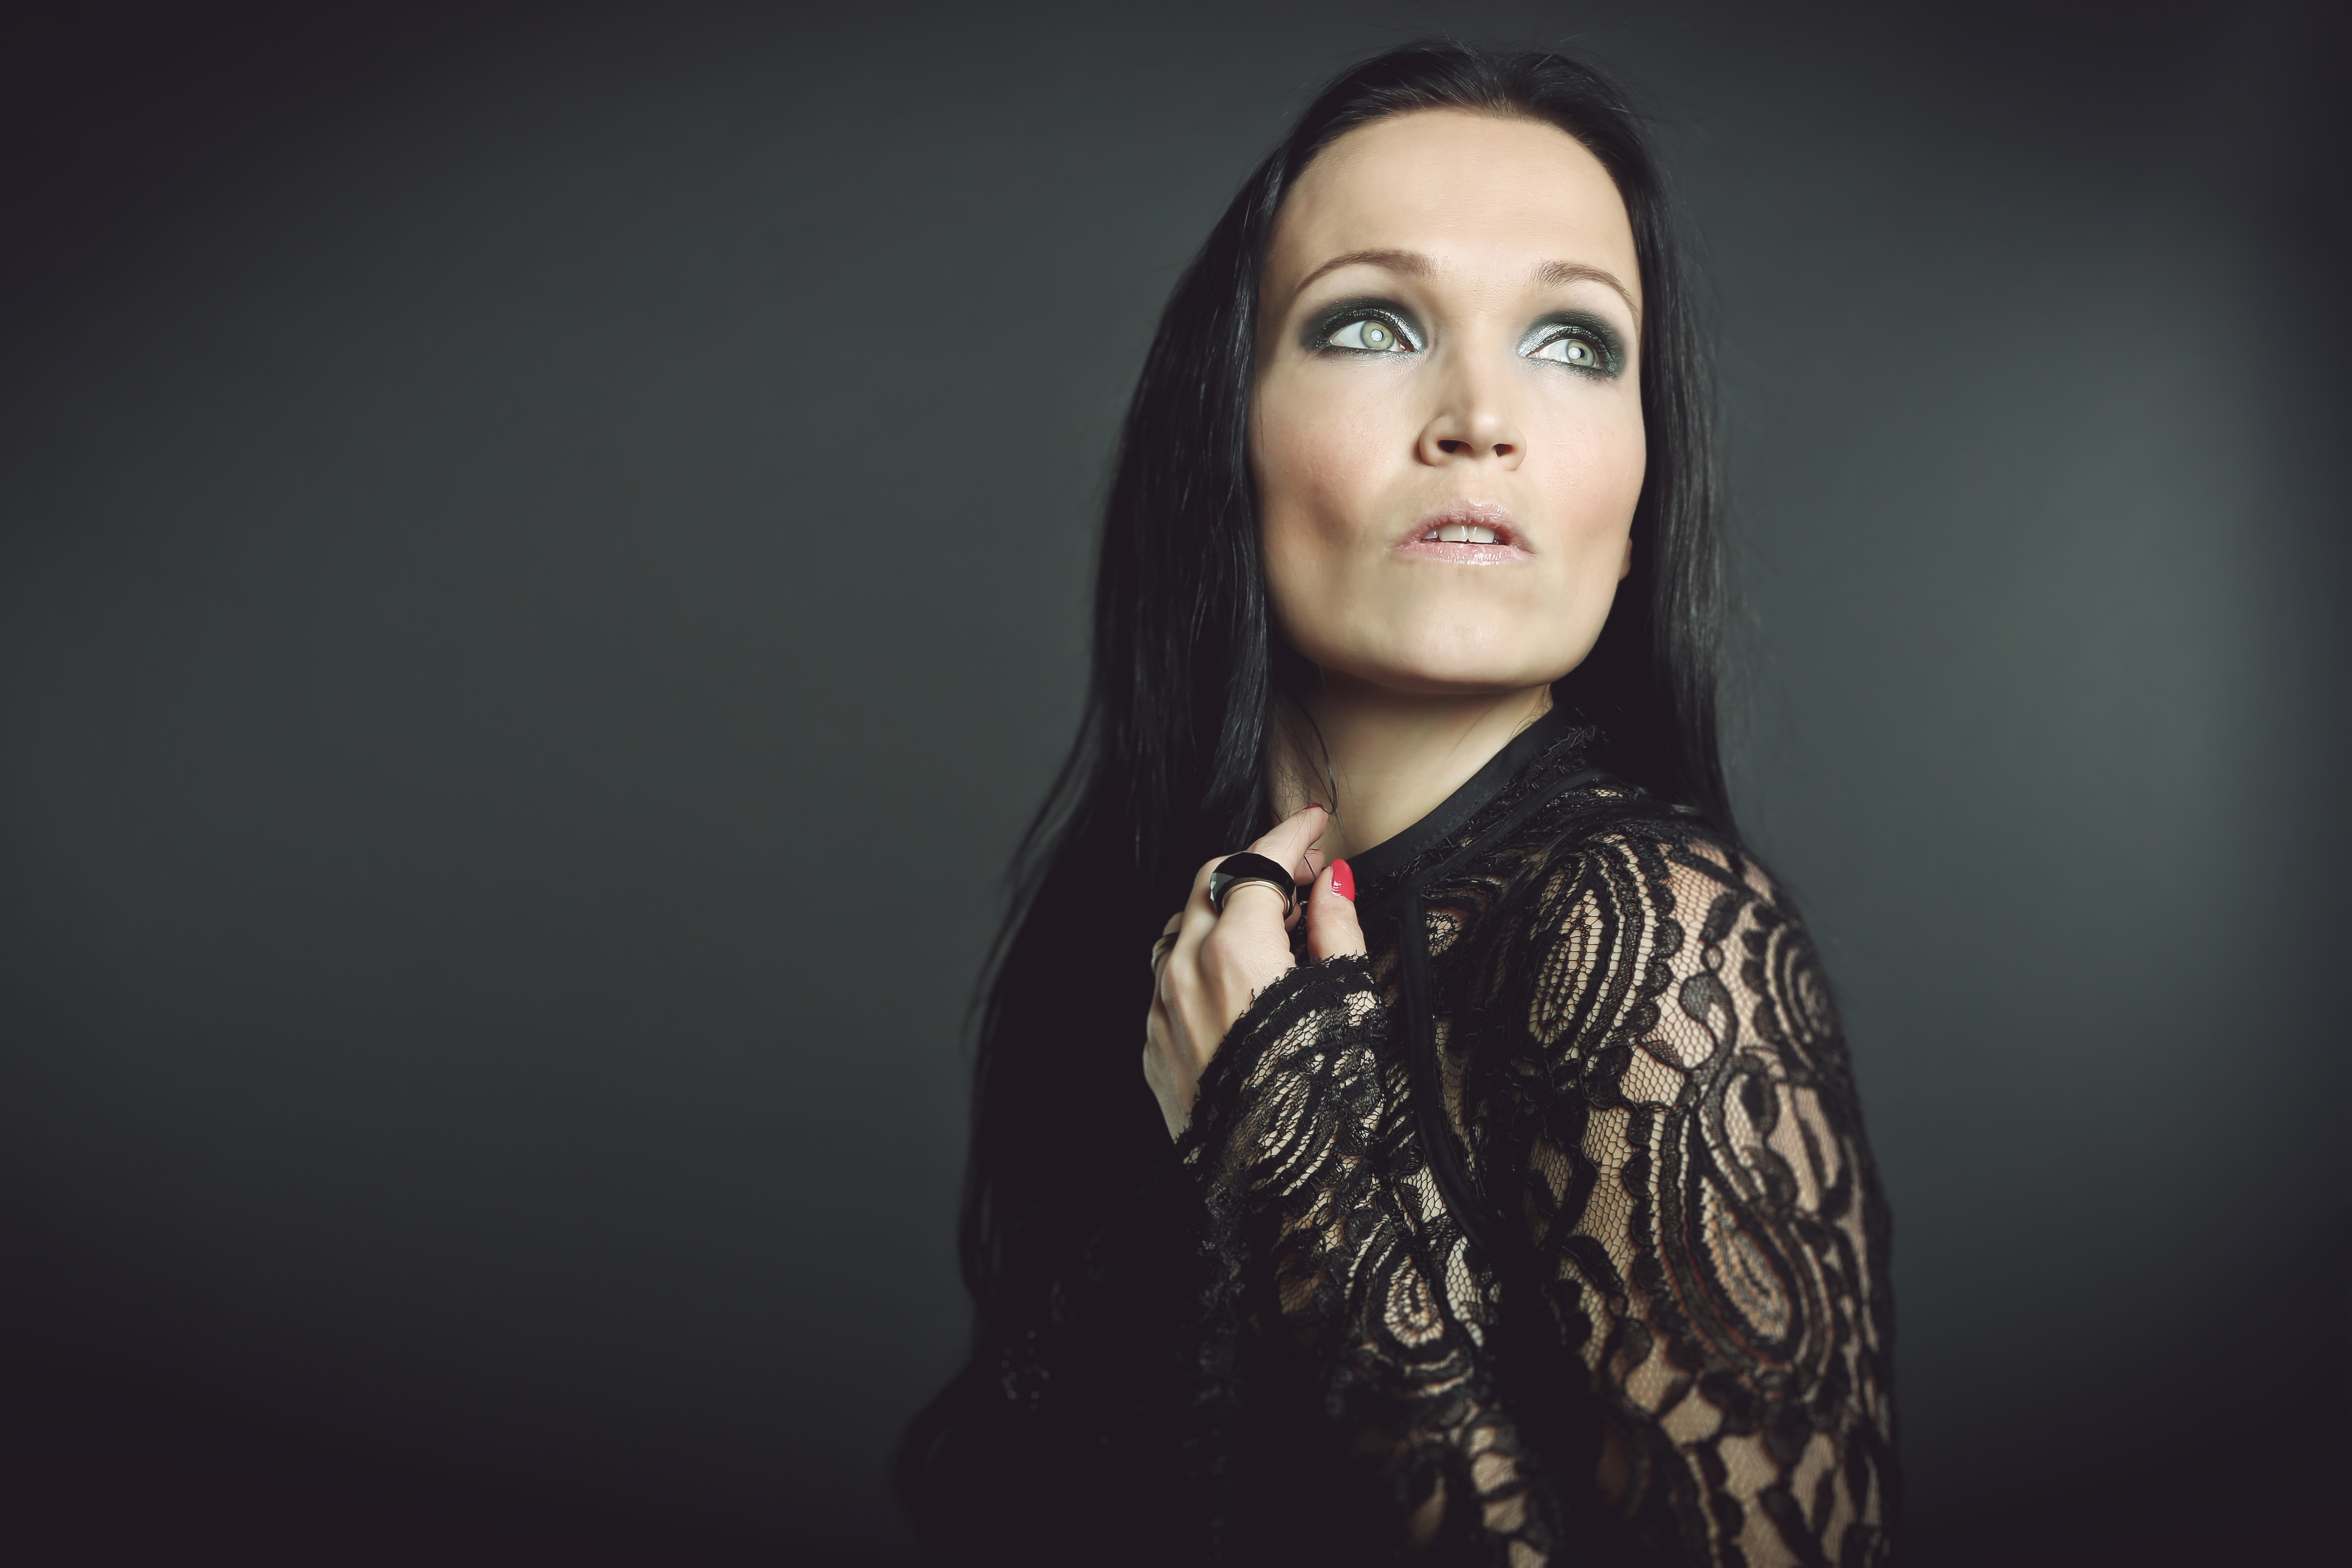 Tarja Turunen coverea a Rammstein y Slipknot en una iglesia